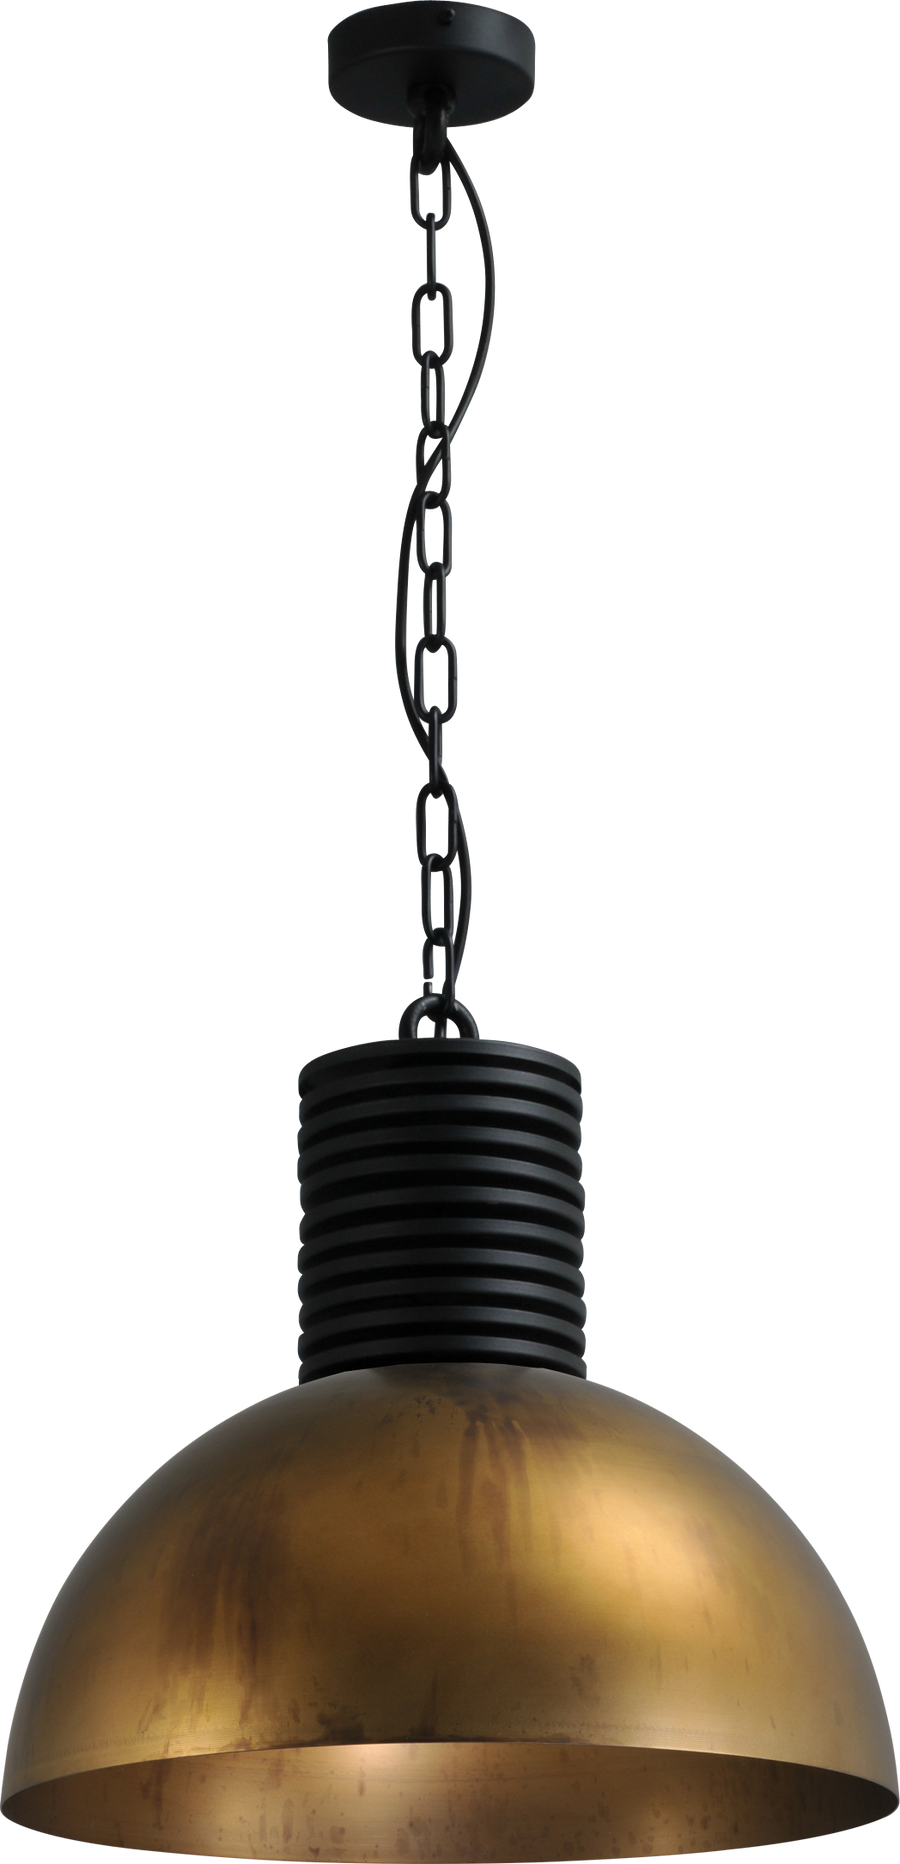 Hanglamp Larino Antik Brass 40 cm Masterlight 2198-10-10-R-K